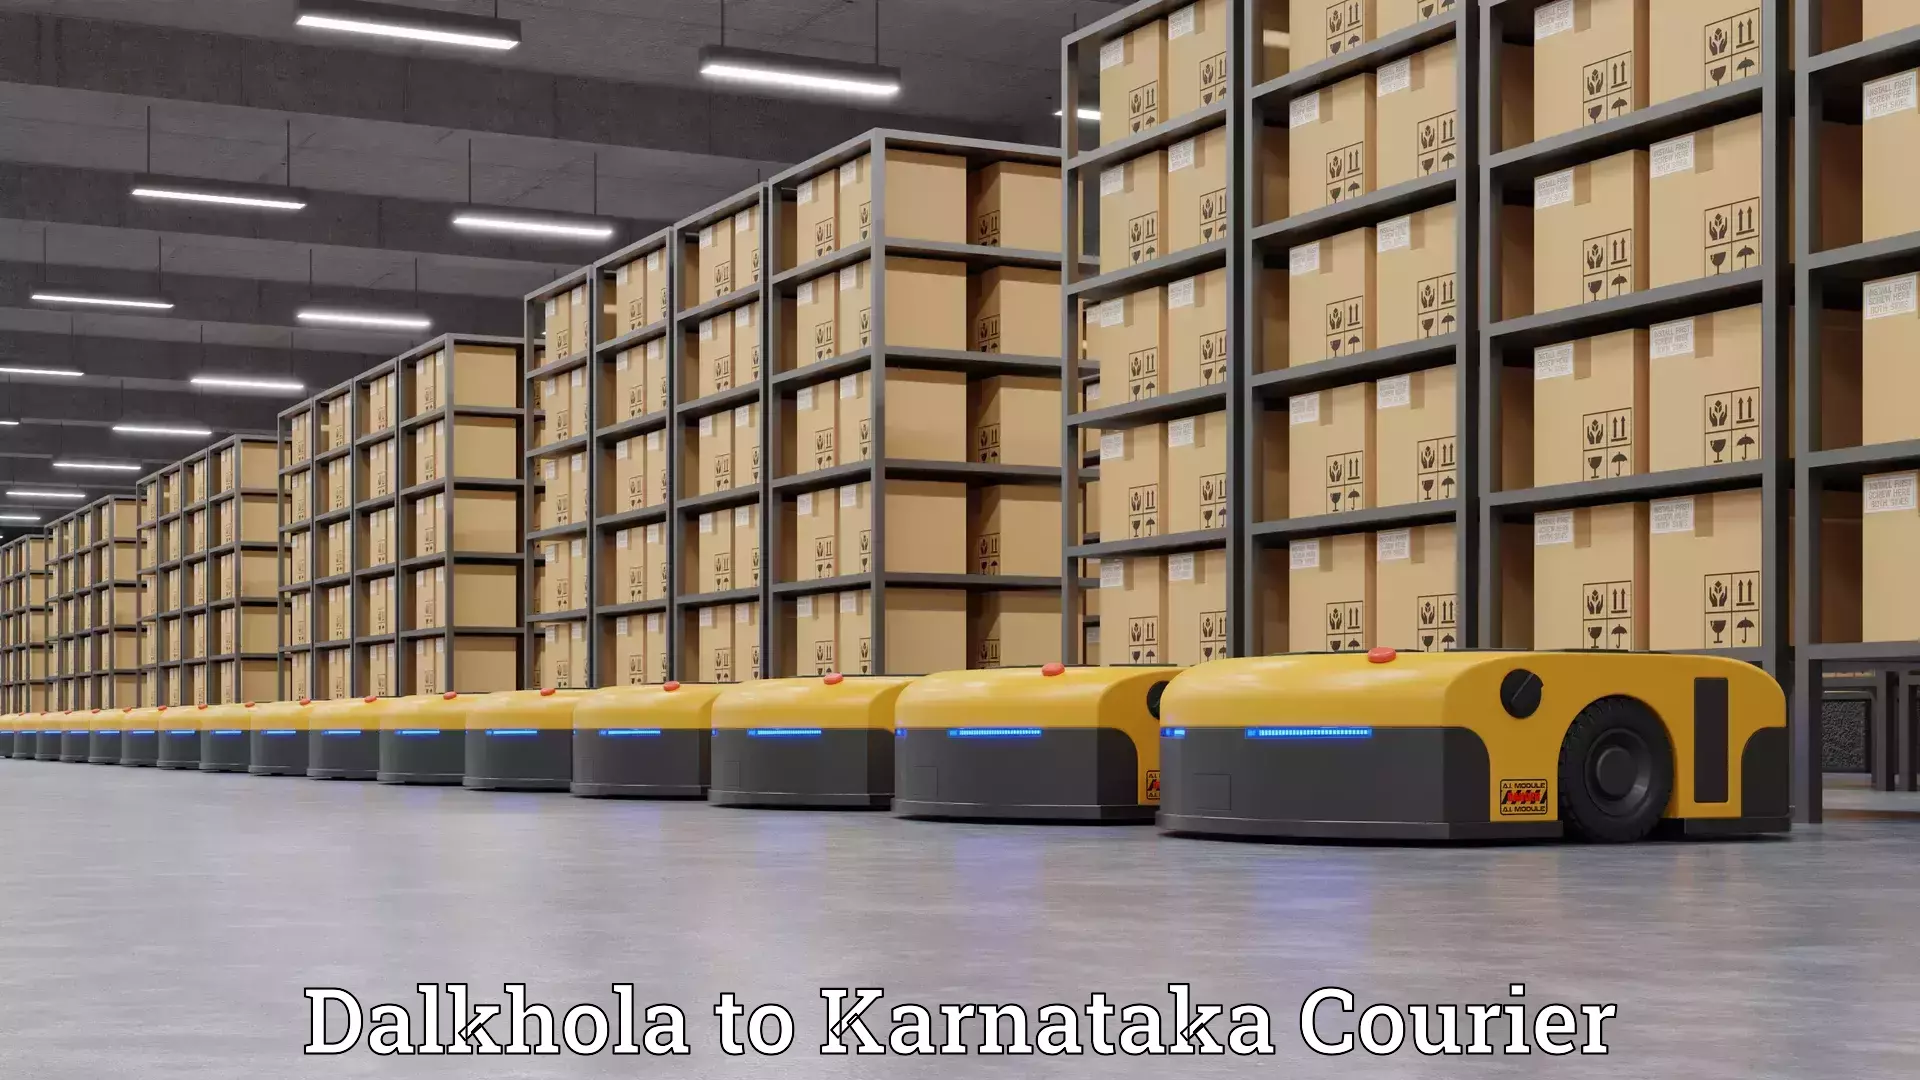 Home relocation experts Dalkhola to Karnataka